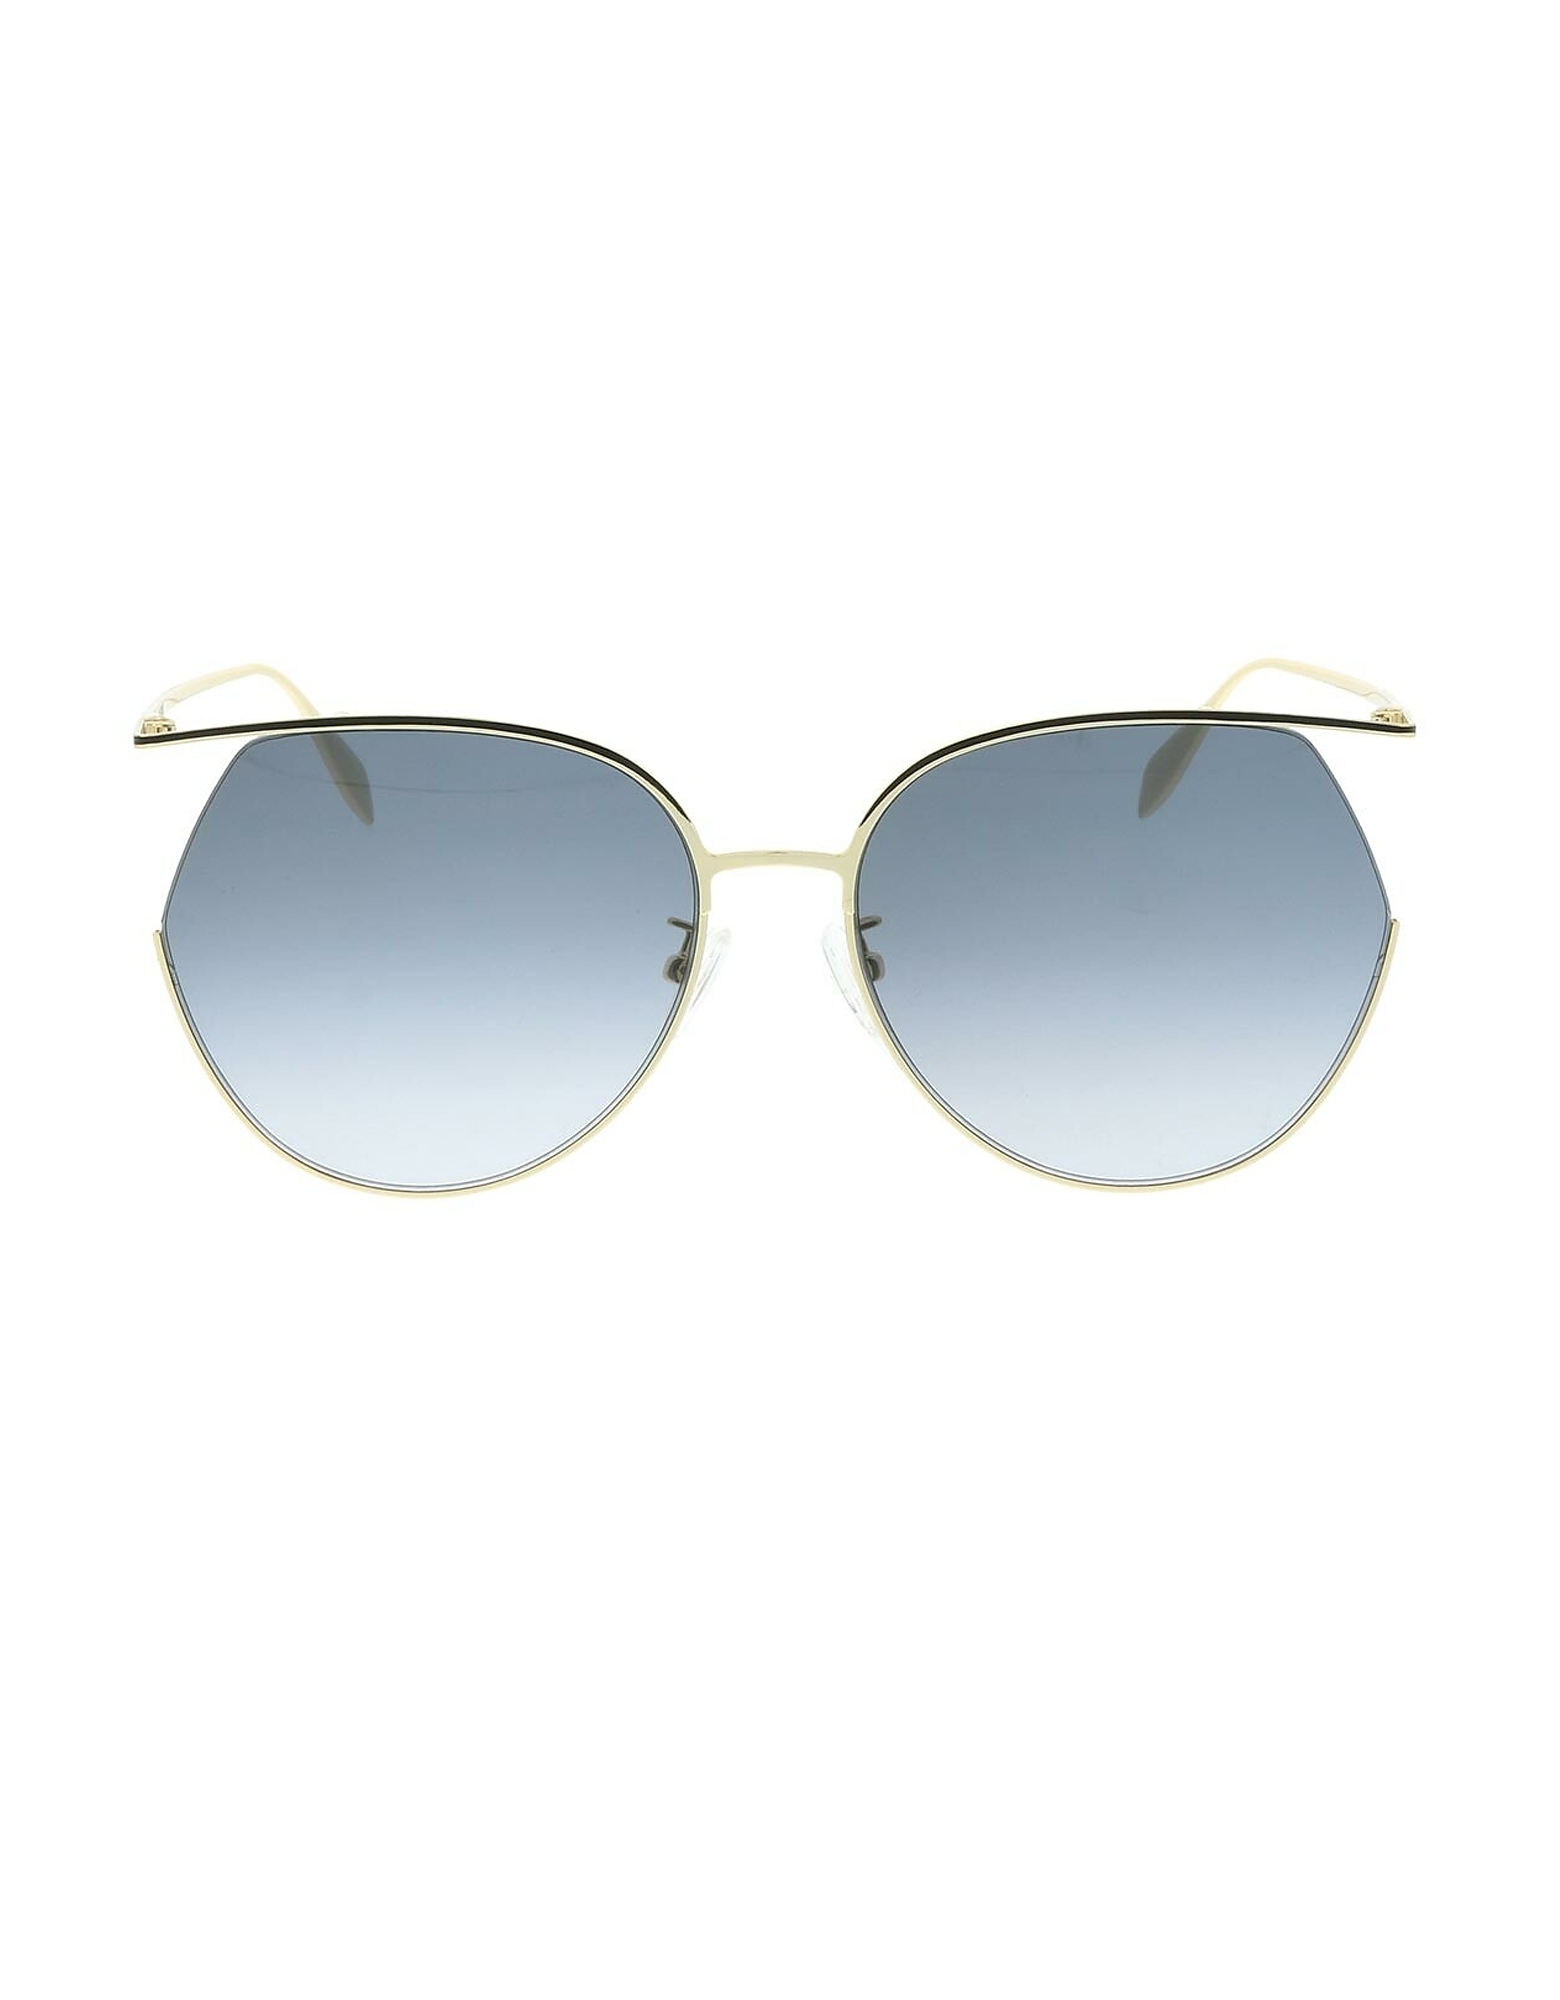 Alexander McQueen Sunglasses AM0255S Gold Metal Frame Round Women's Sunglasses